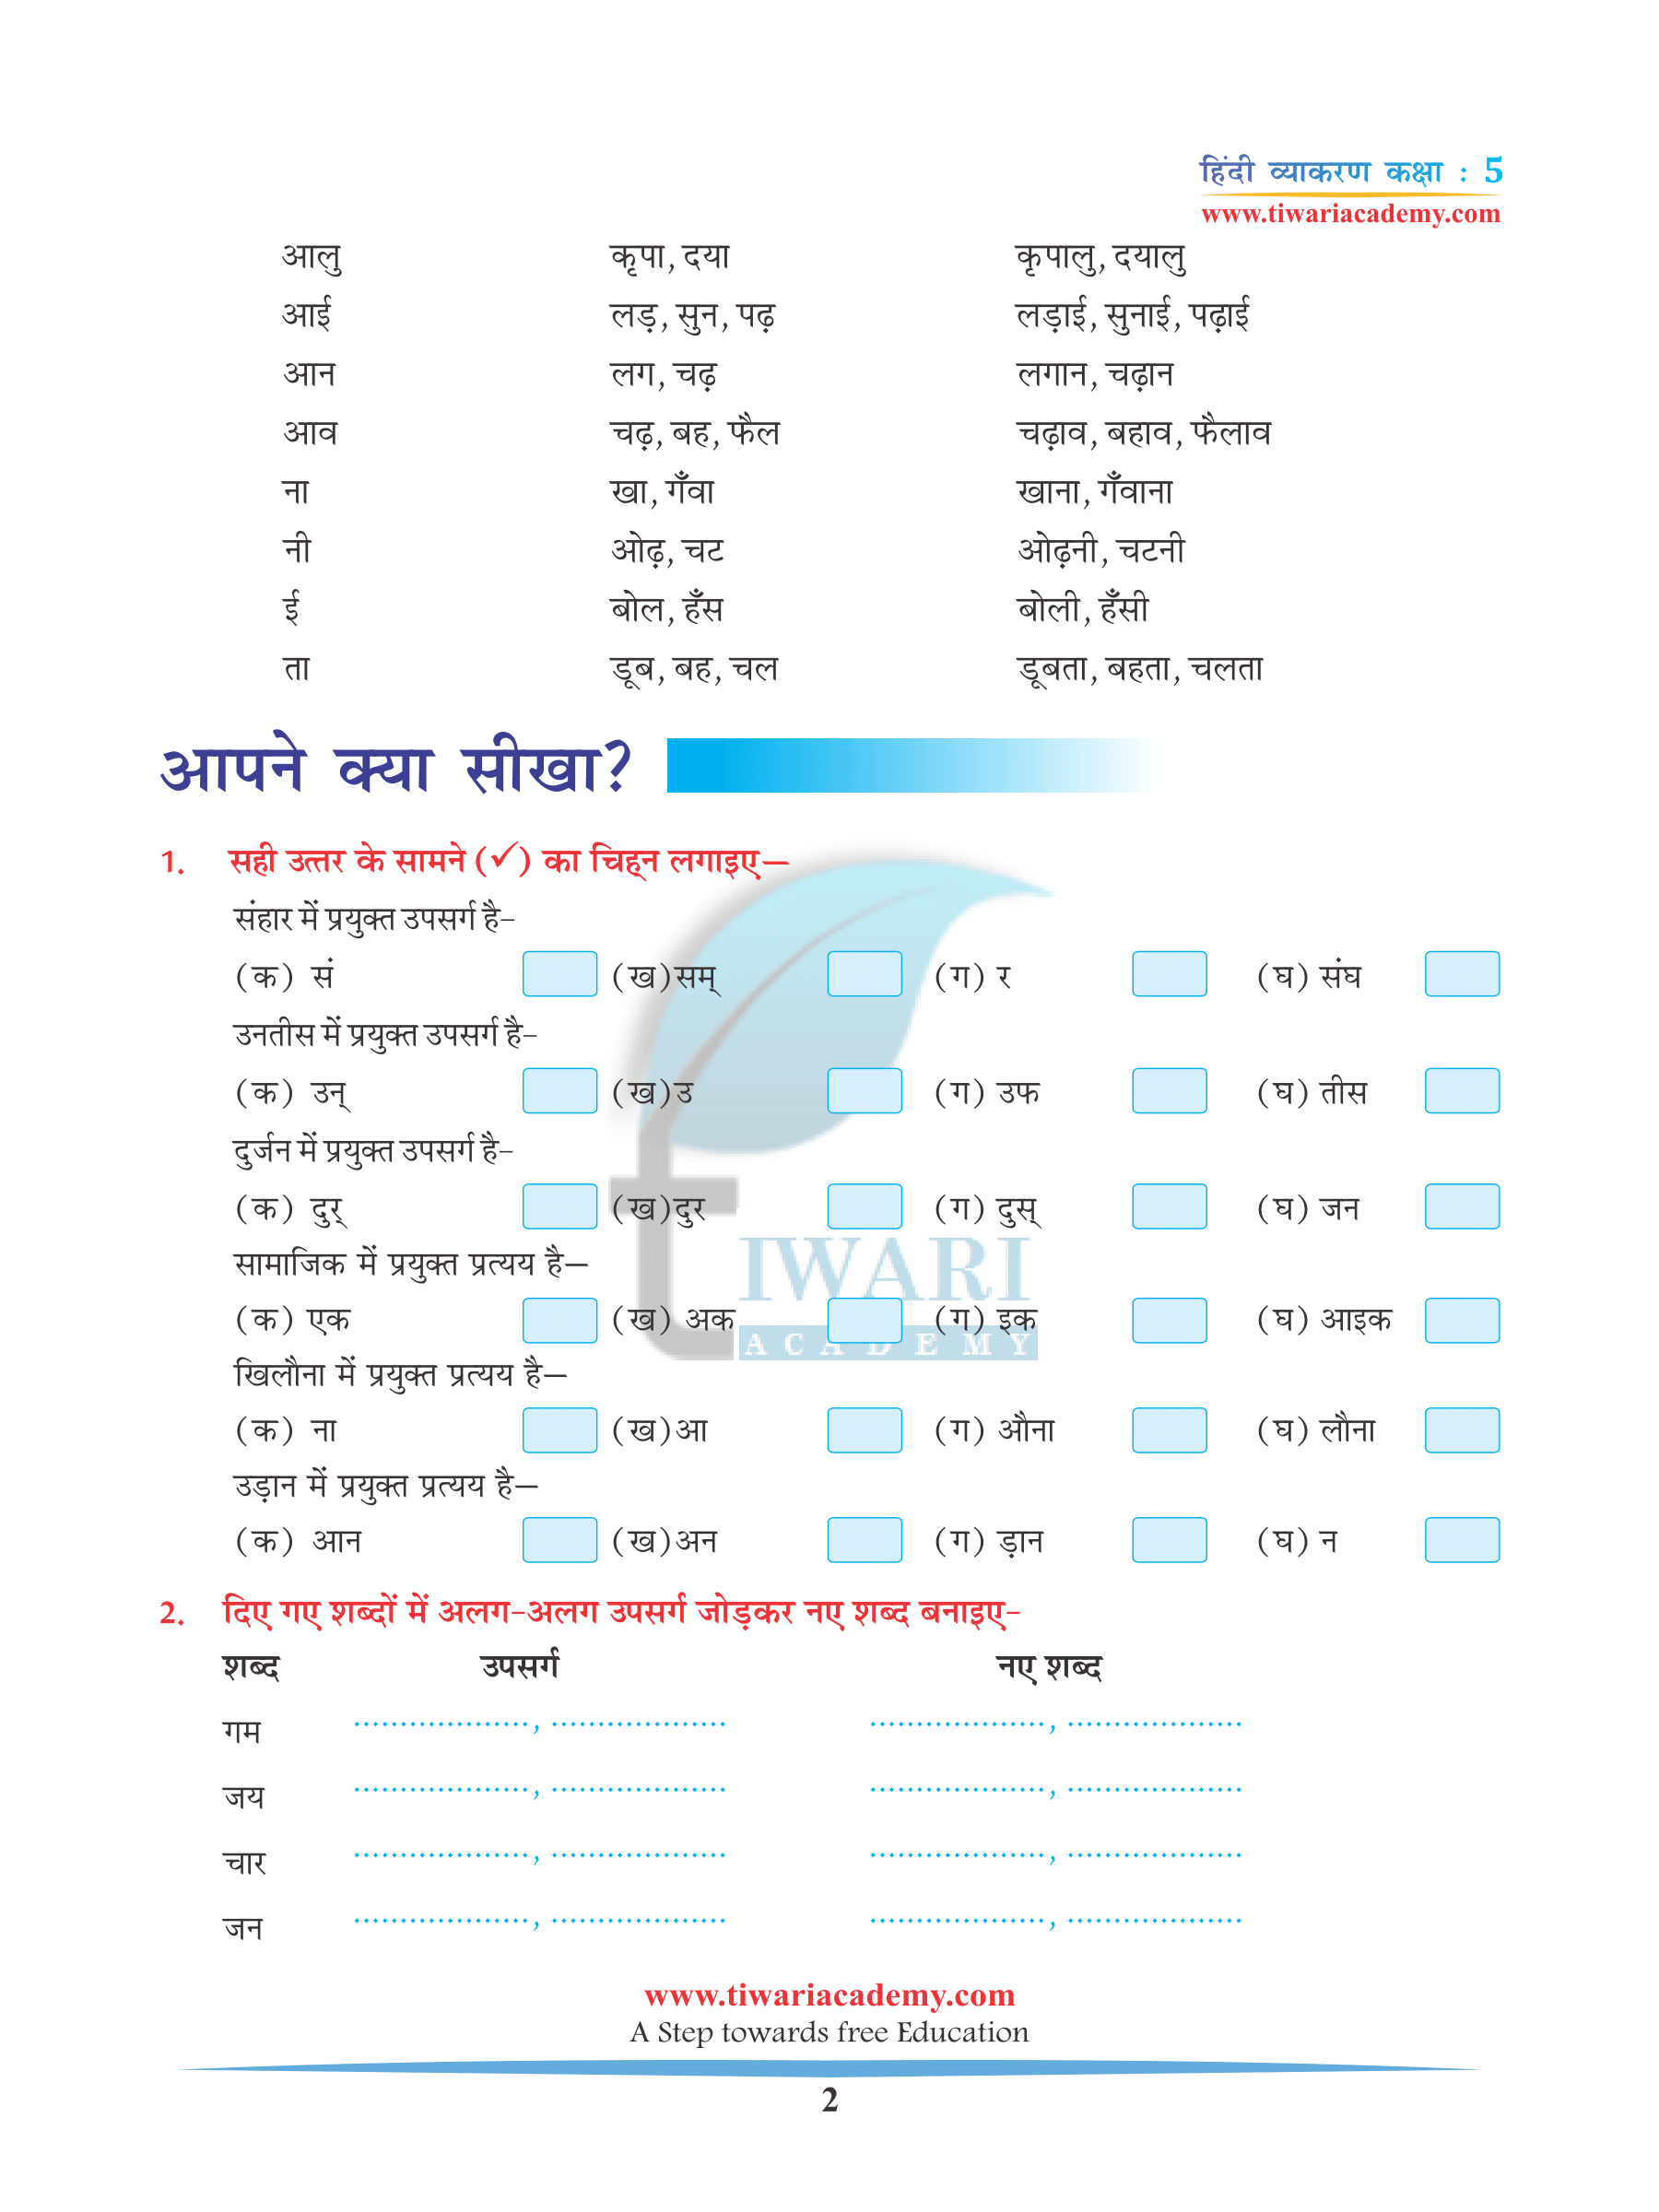 CBSE Class 5 Hindi Grammar Chapter 12 Shabd Nirman, Upsarg, Pratyay in PDF